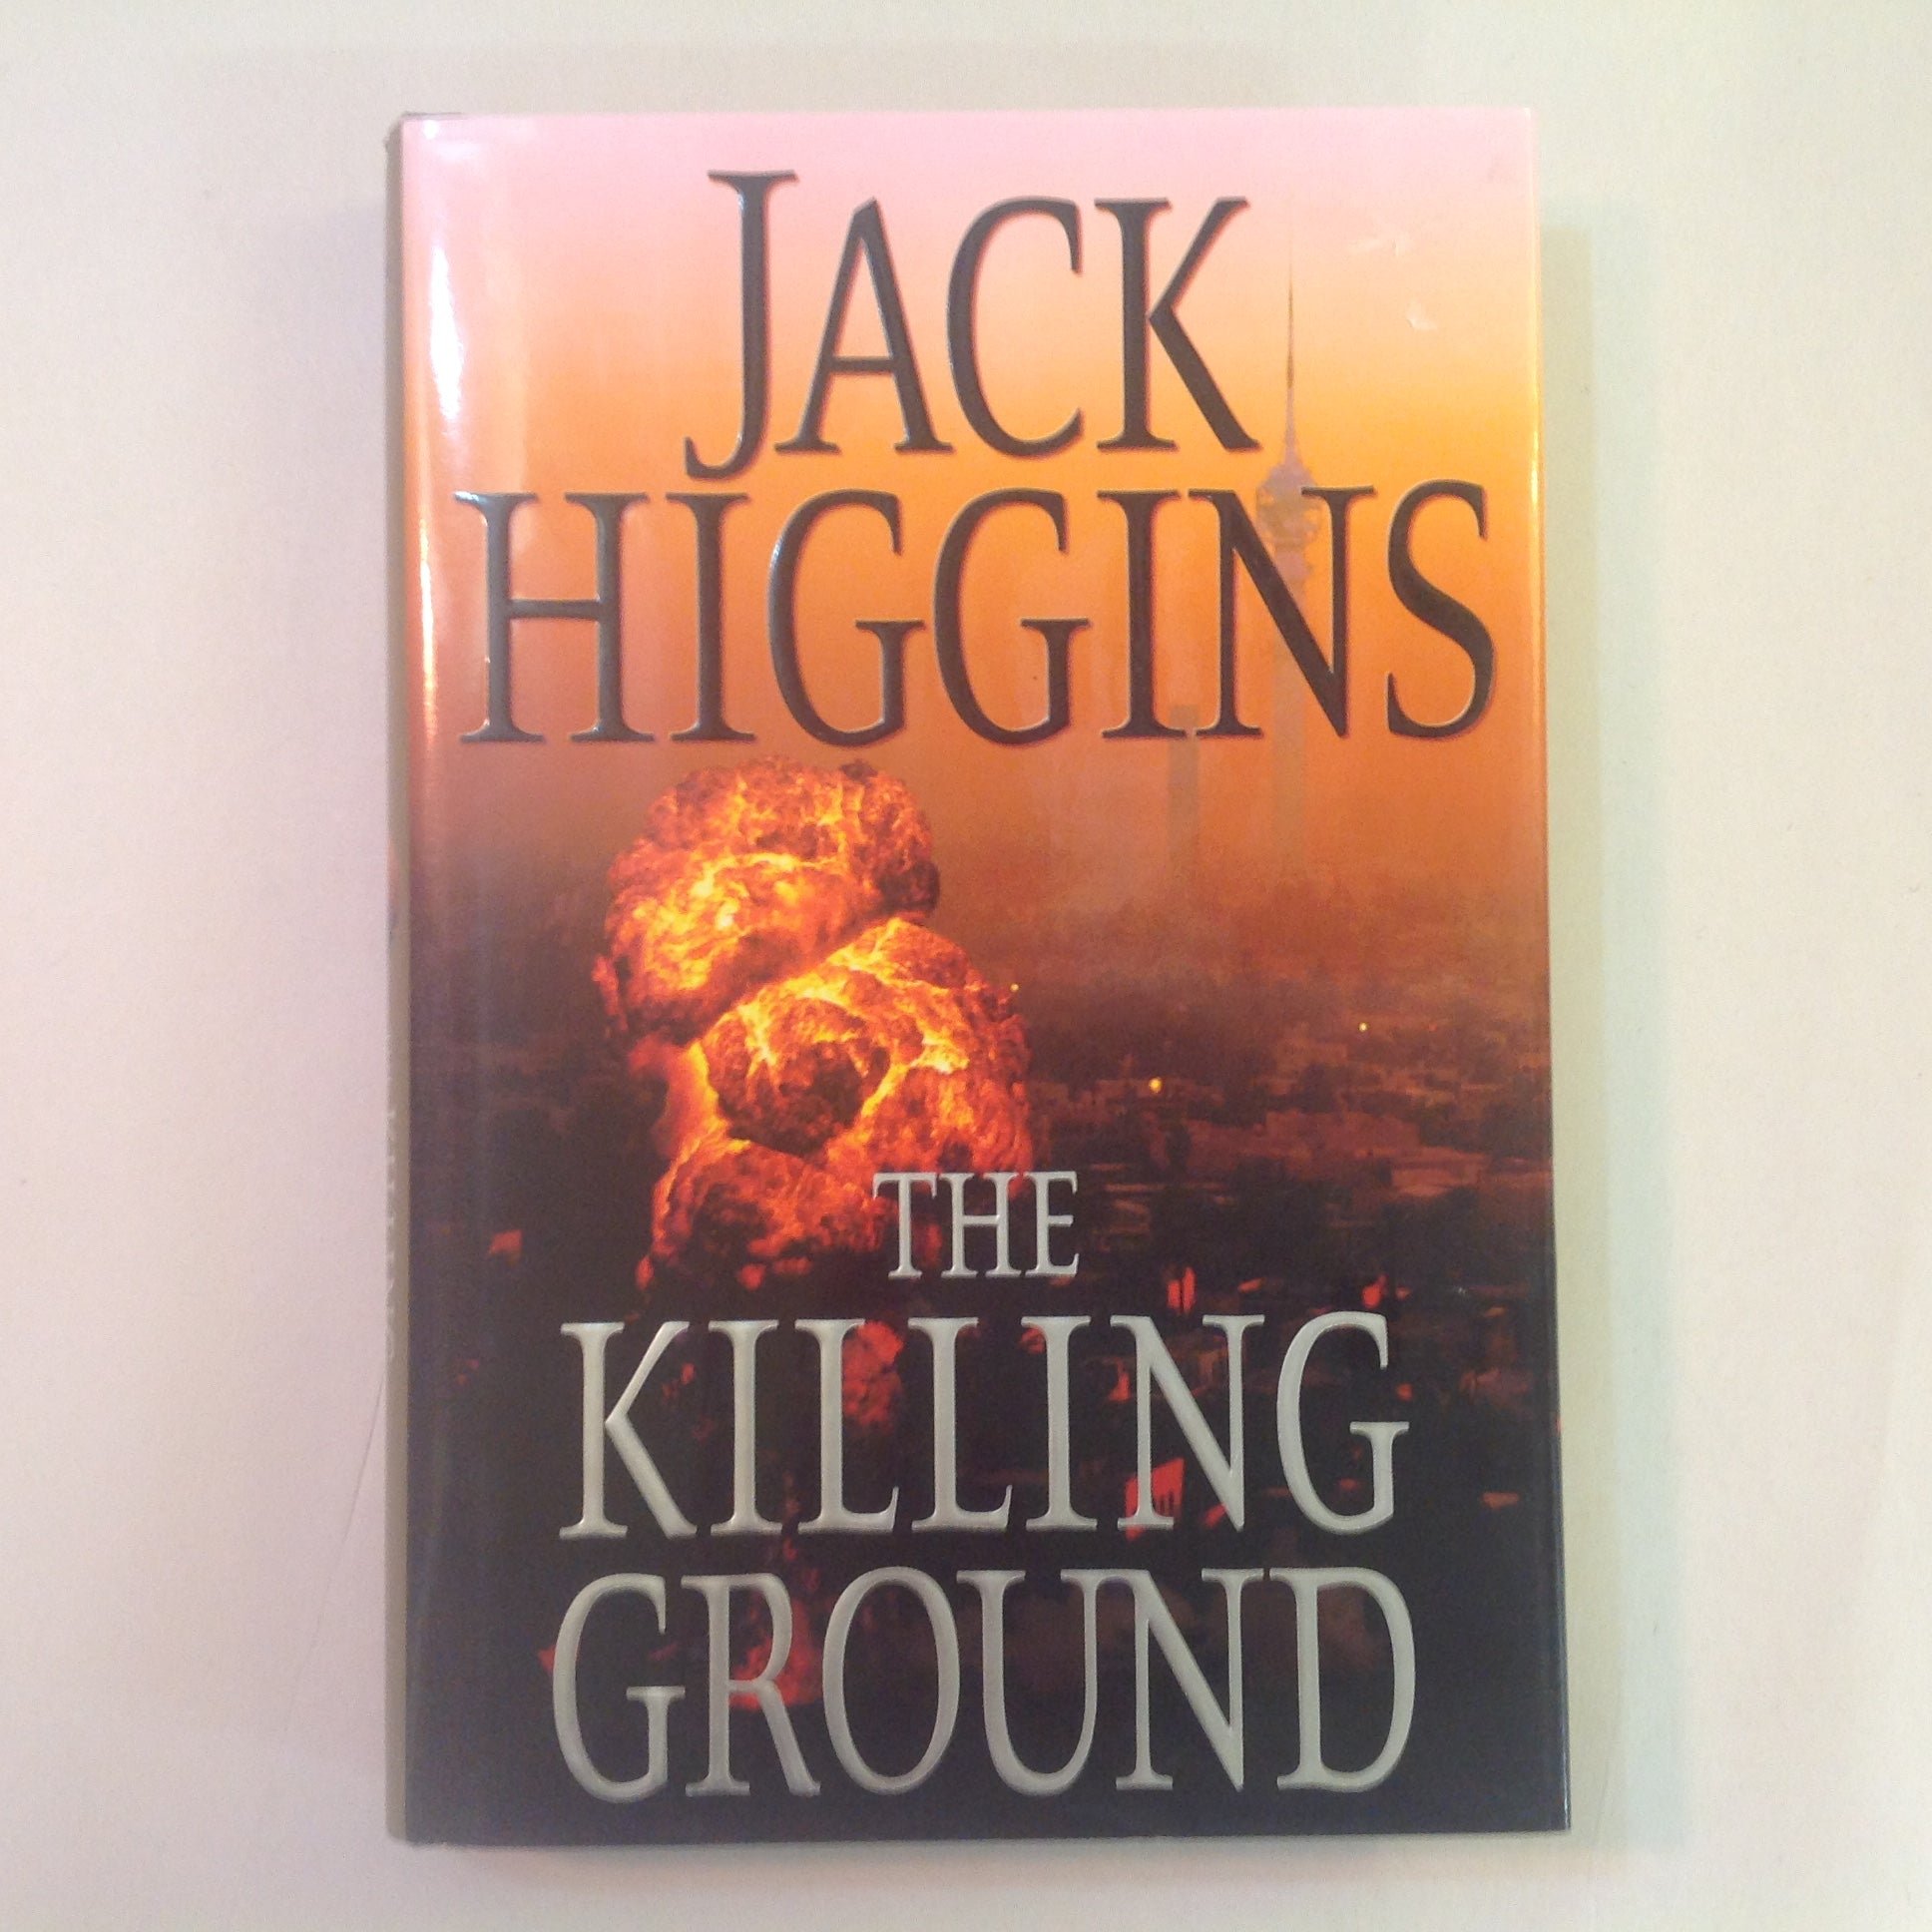 2008 HCDJ The Killing Ground Jack Higgins First Printing